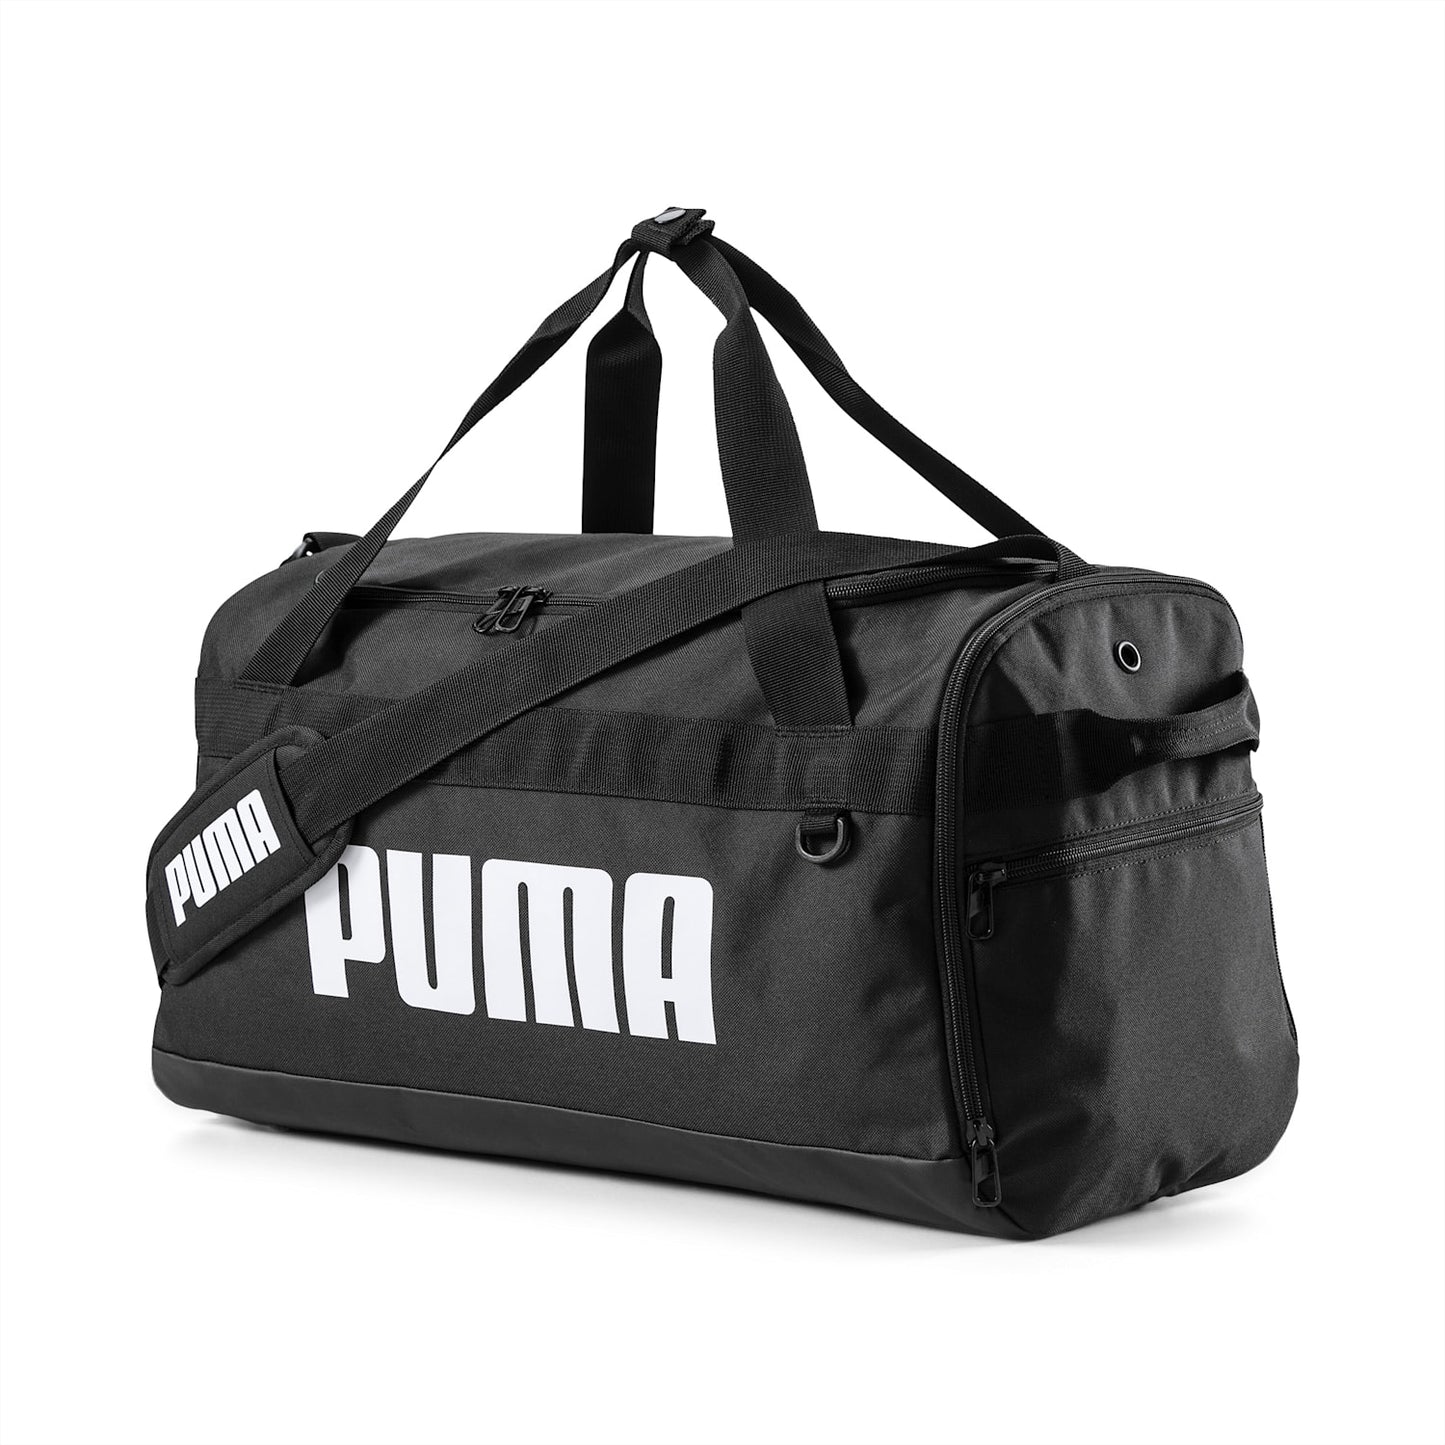 PUMA Challenger Small Duffel Bag-076620 01